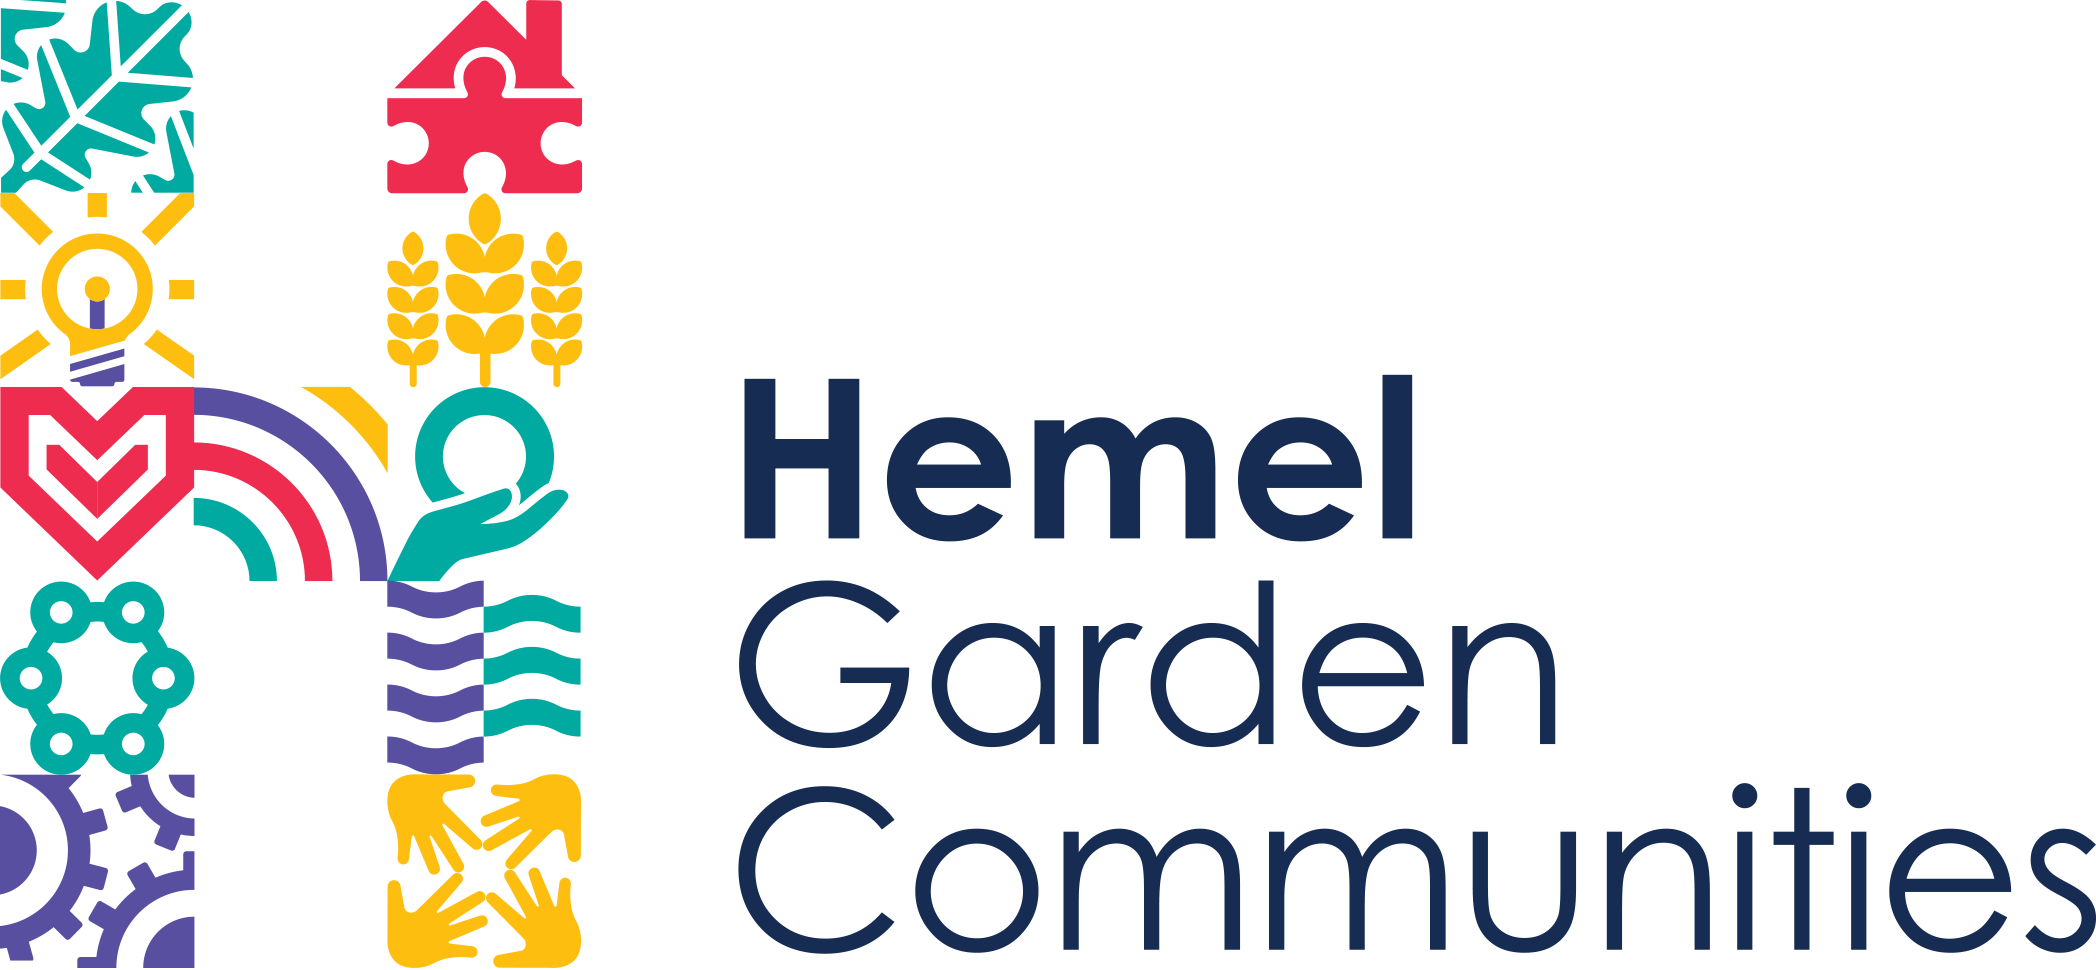 Hemel Garden Communities handed £1 million funding boost